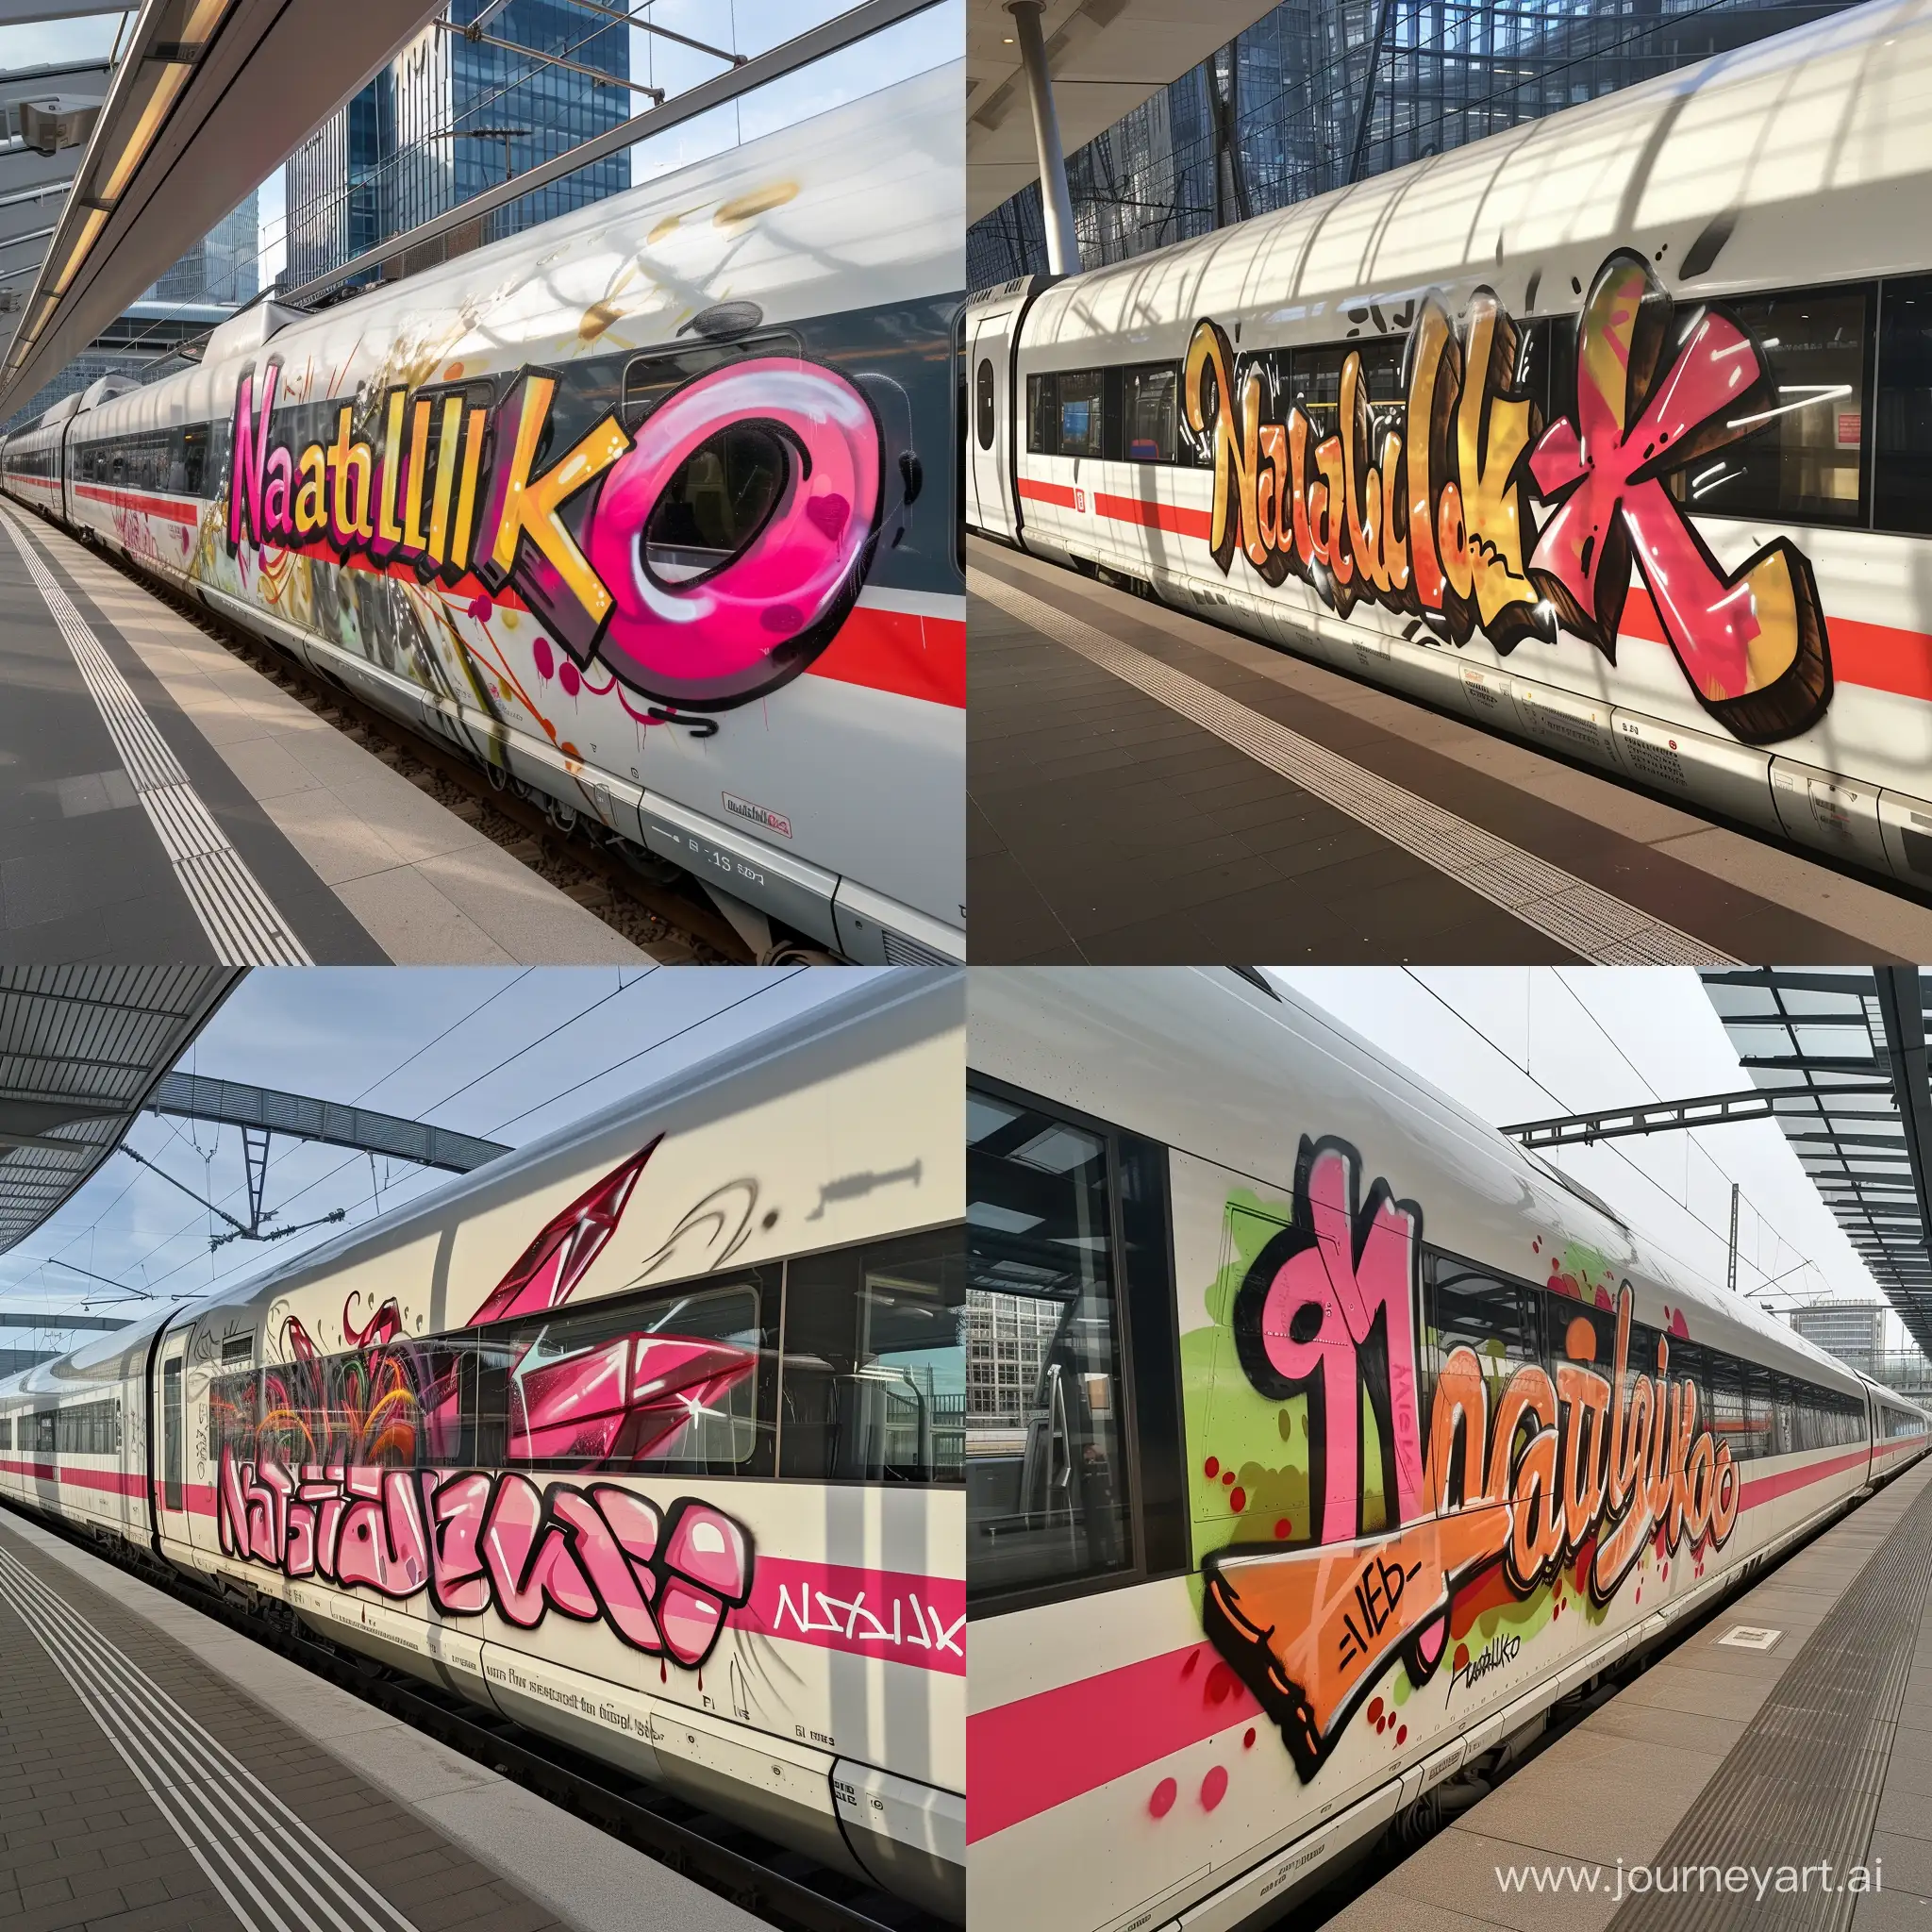 Urban-Artistry-Vibrant-Graffiti-Spell-NataliKo-on-Exterior-of-ICE-Train